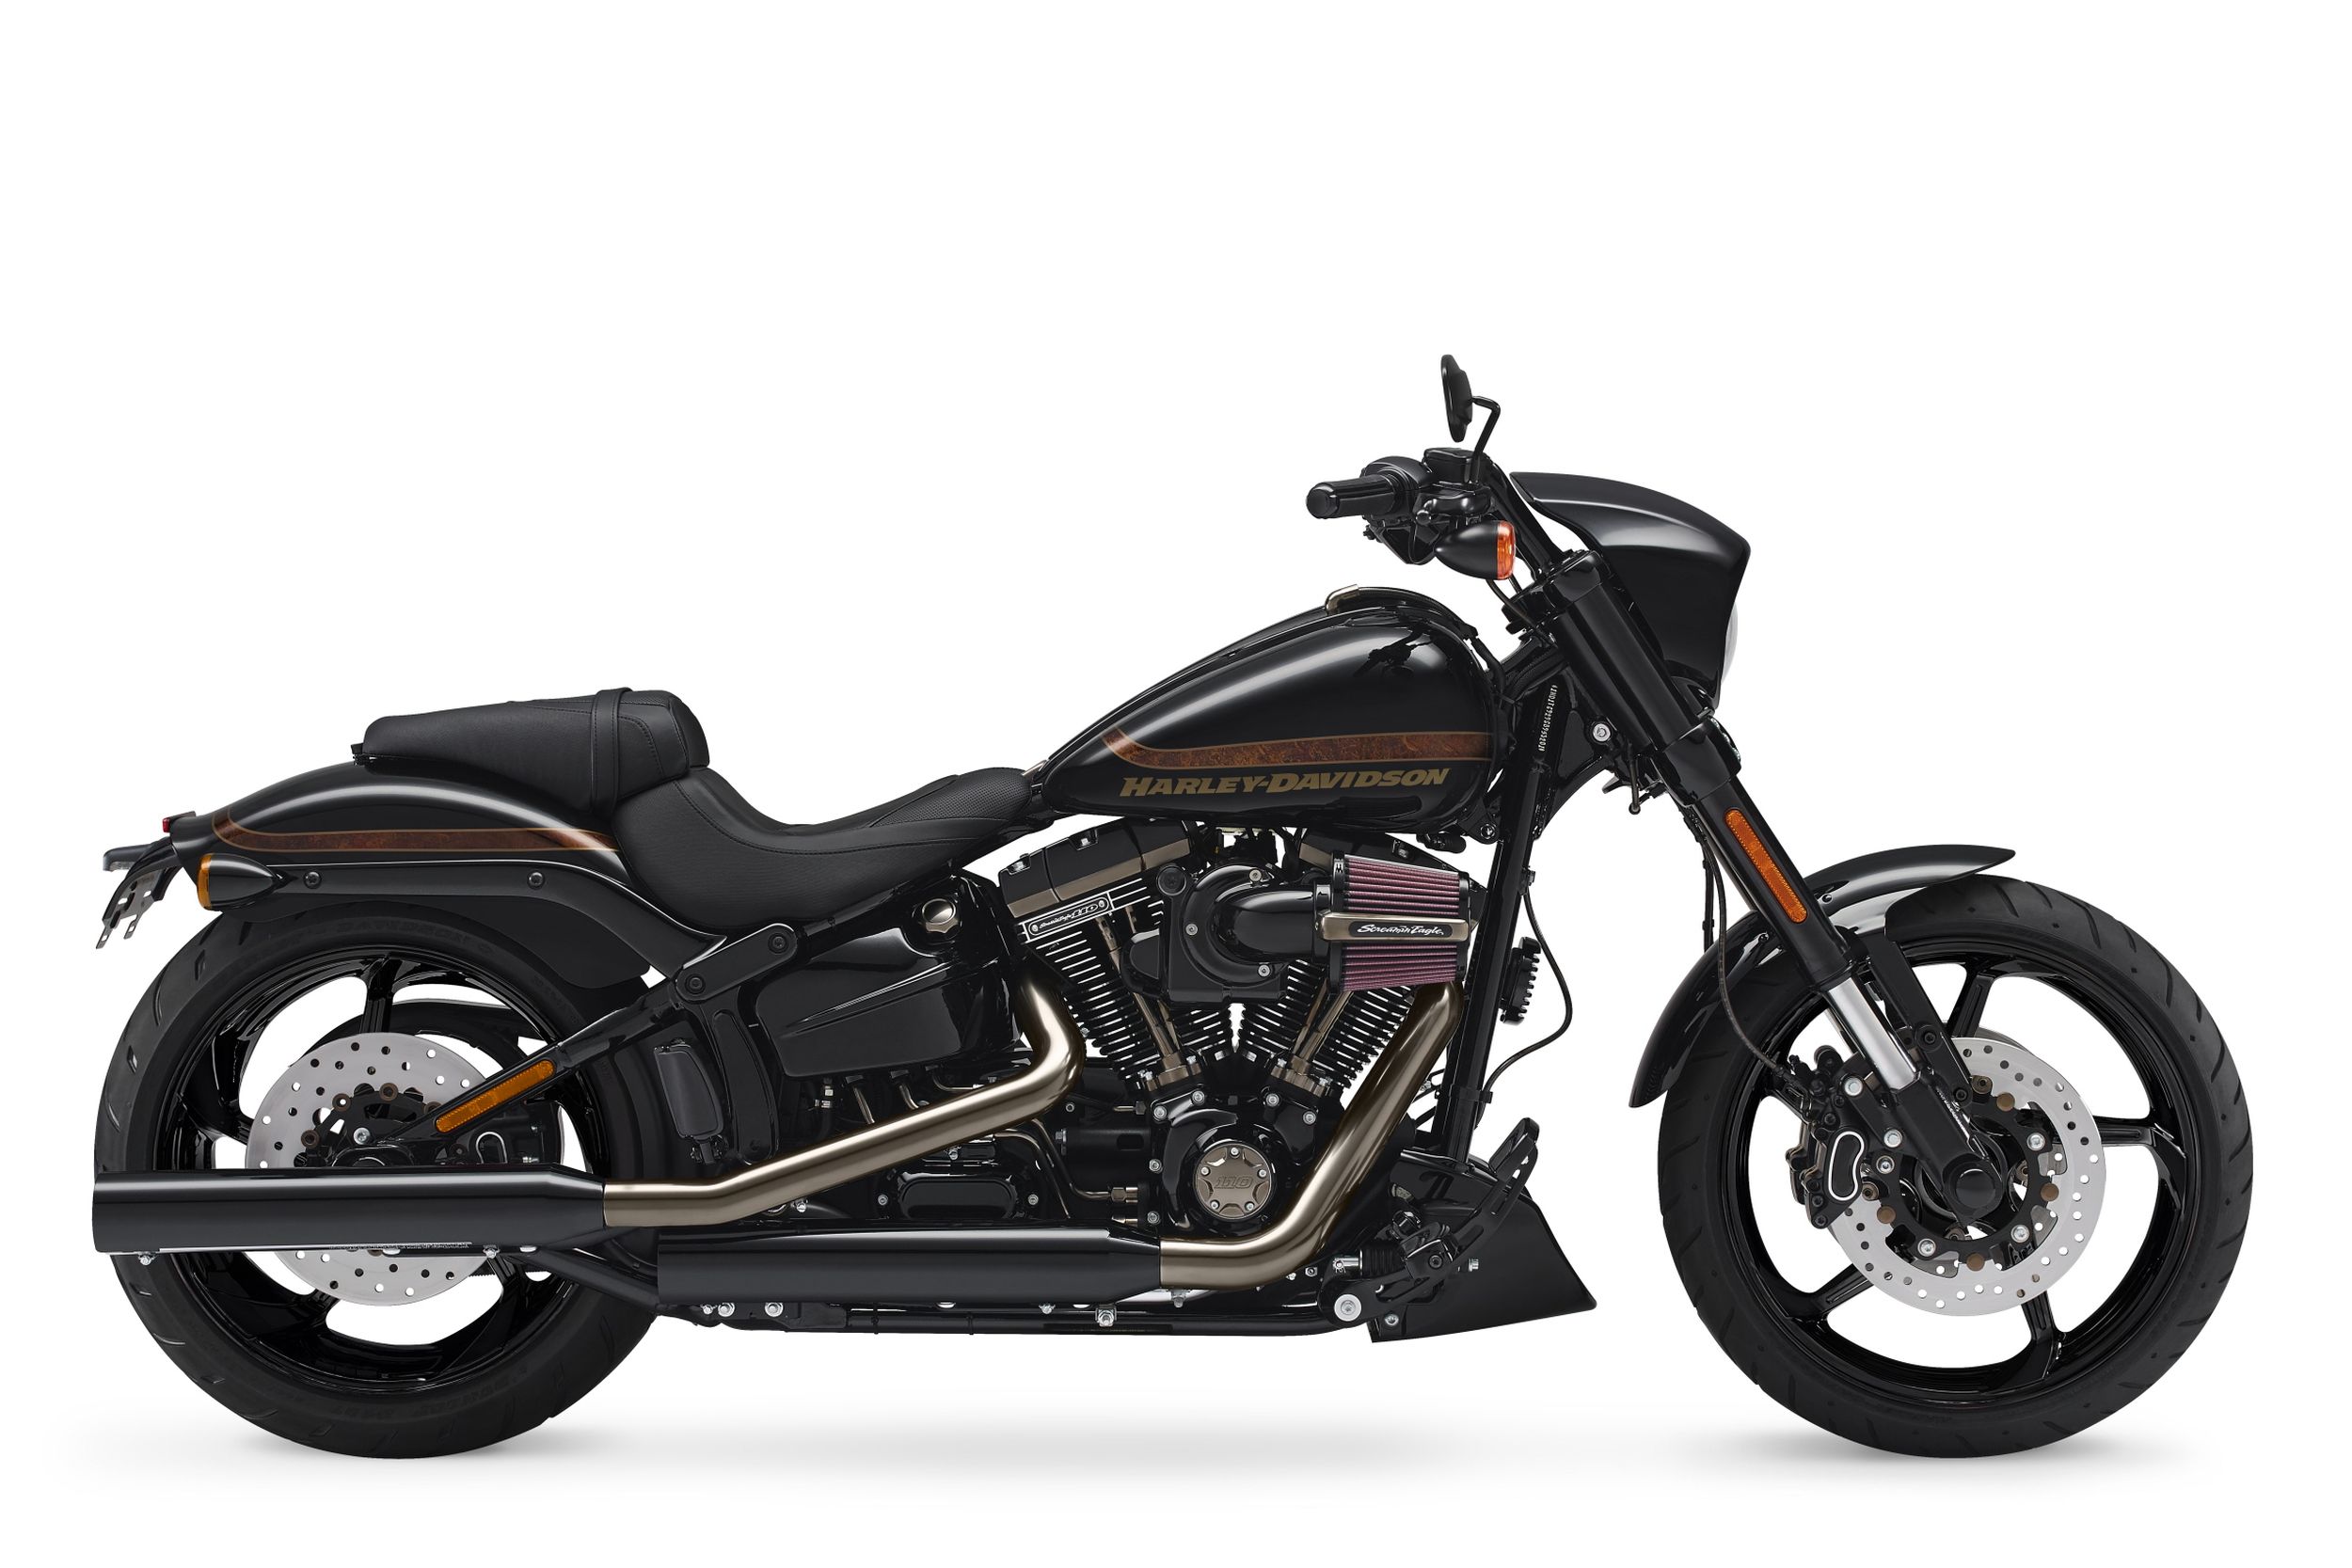 Motorrad Vergleich Harley Davidson Cvo Pro Street Breakout Fxse 2016 Vs Harley Davidson Softail Breakout 114 Fxbrs 2021